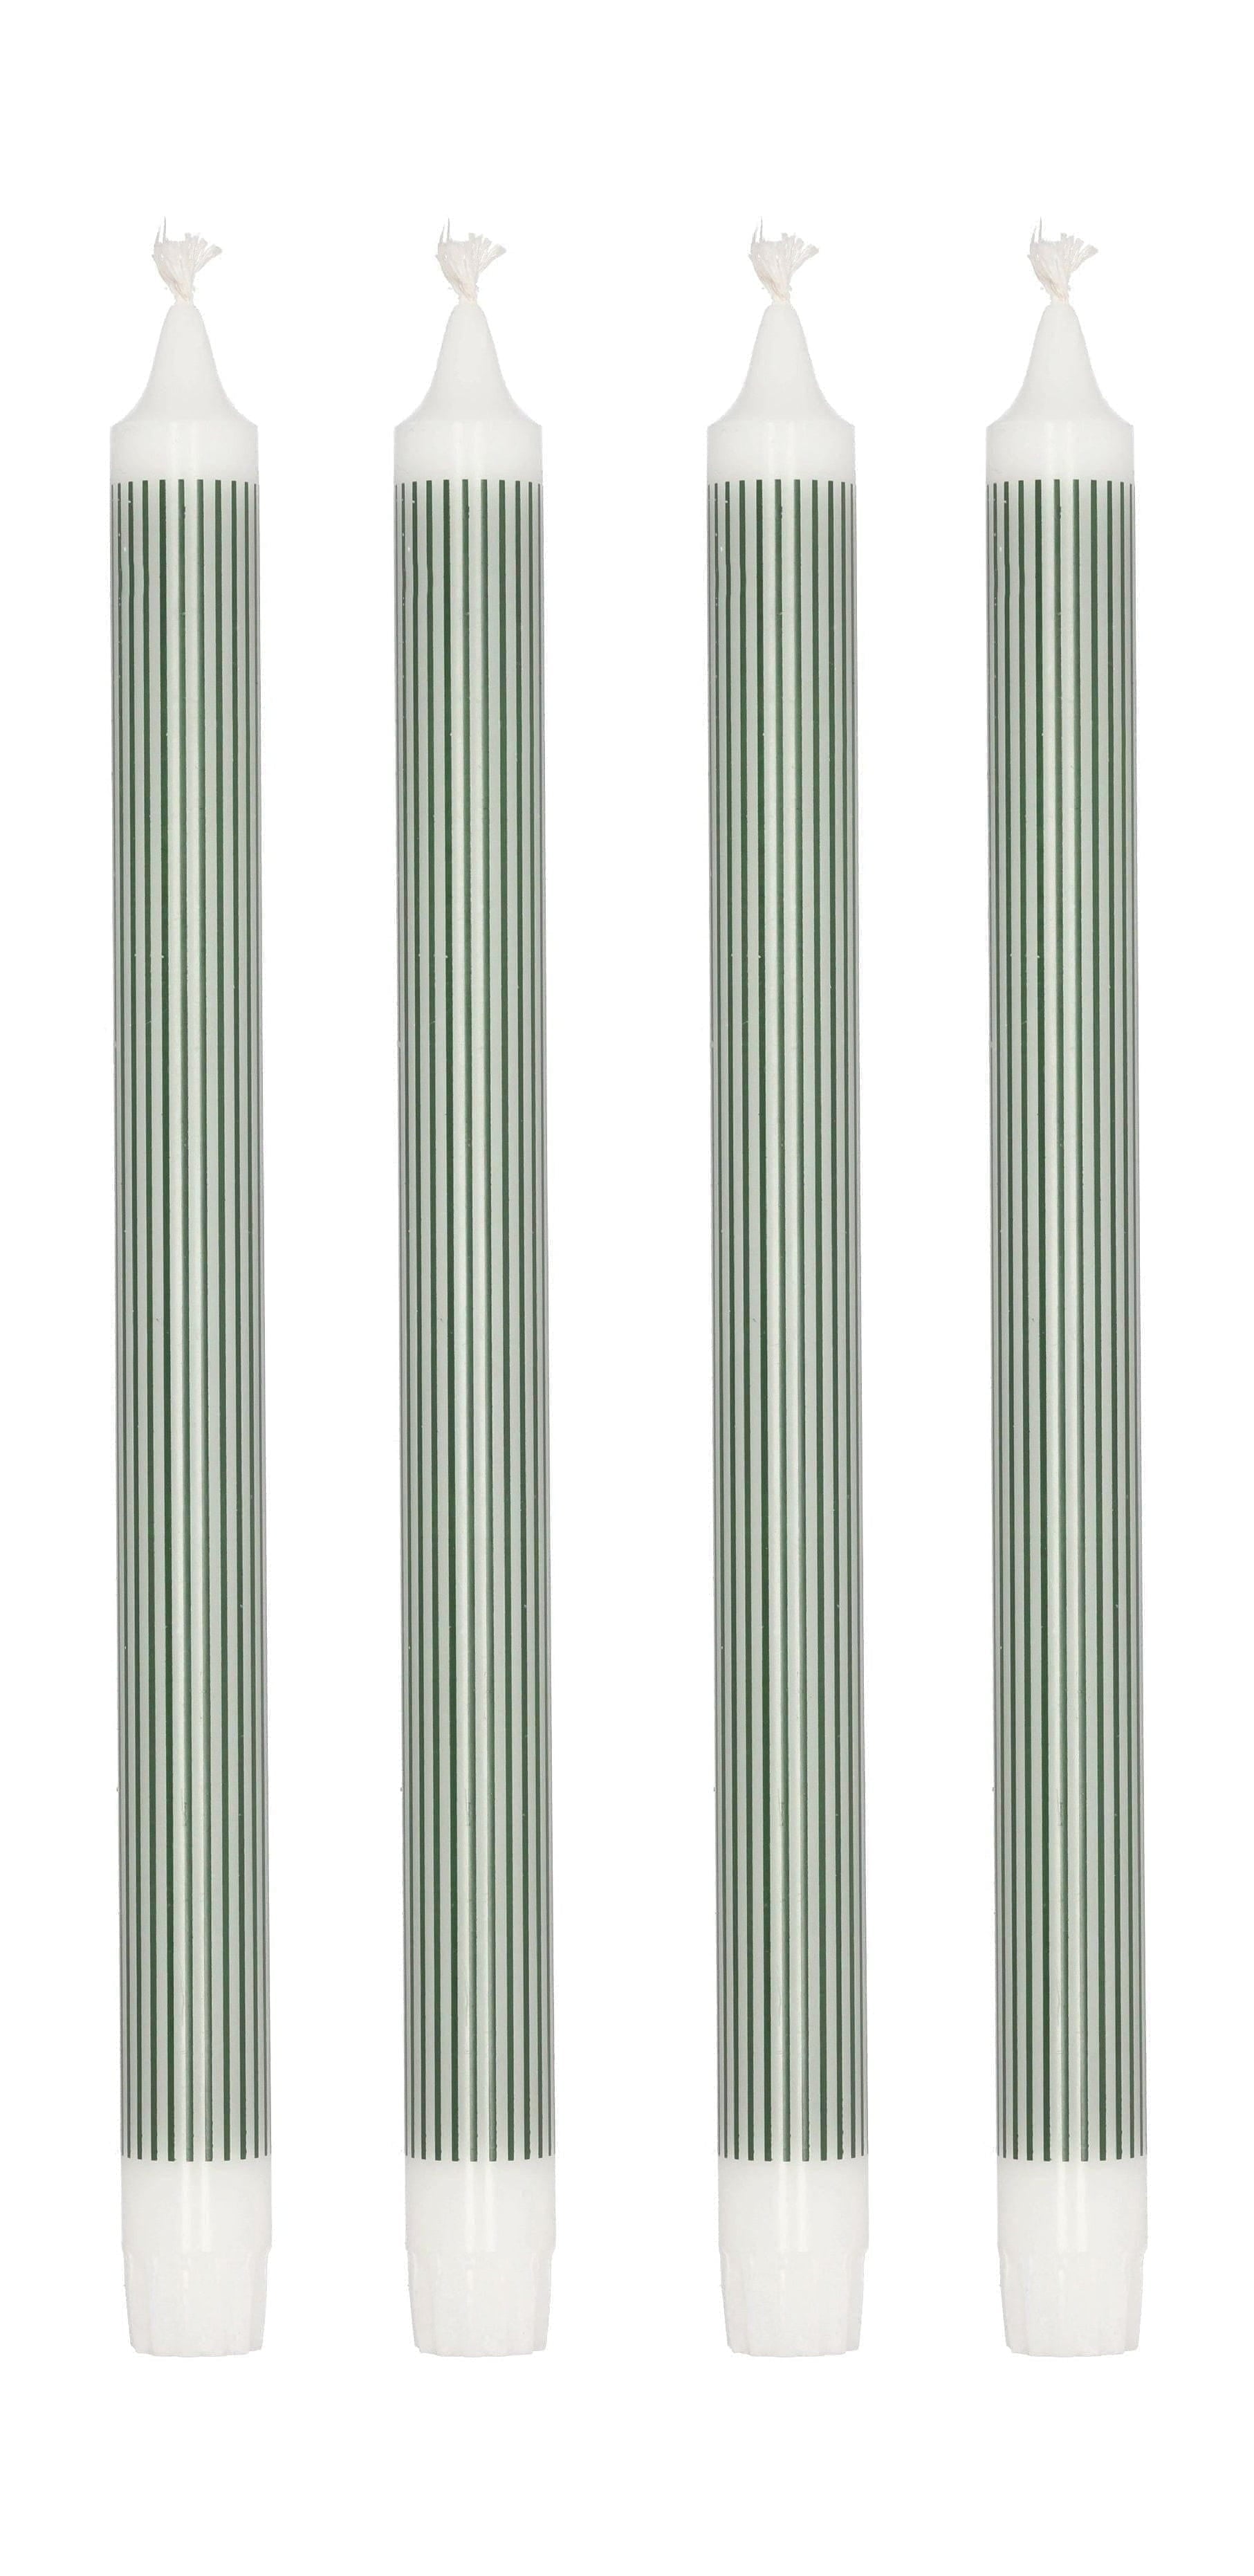 Villa Styles Styles Stick Candle Juego de 4 Øx H 2,2x29, verde